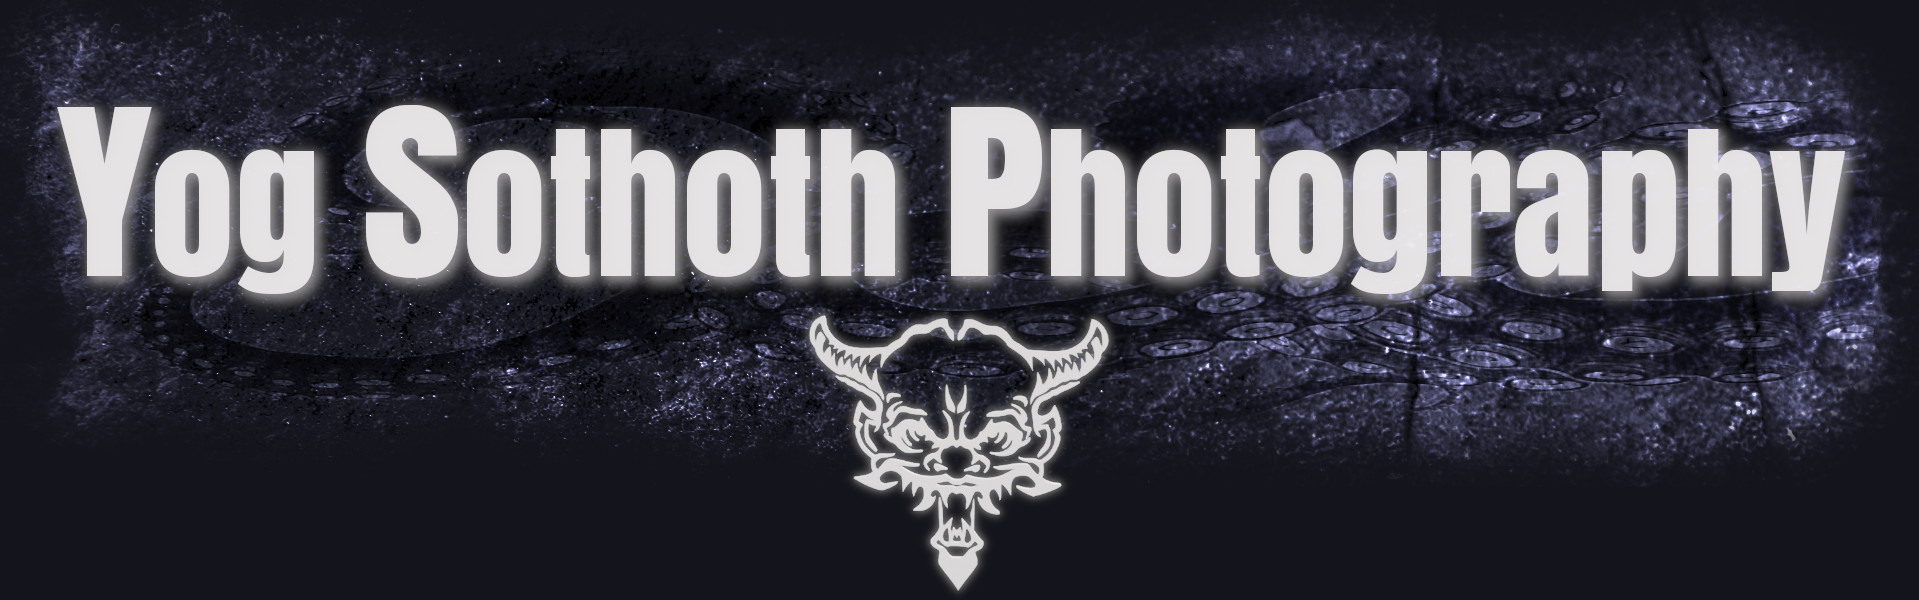 Yog Sothoth Photography